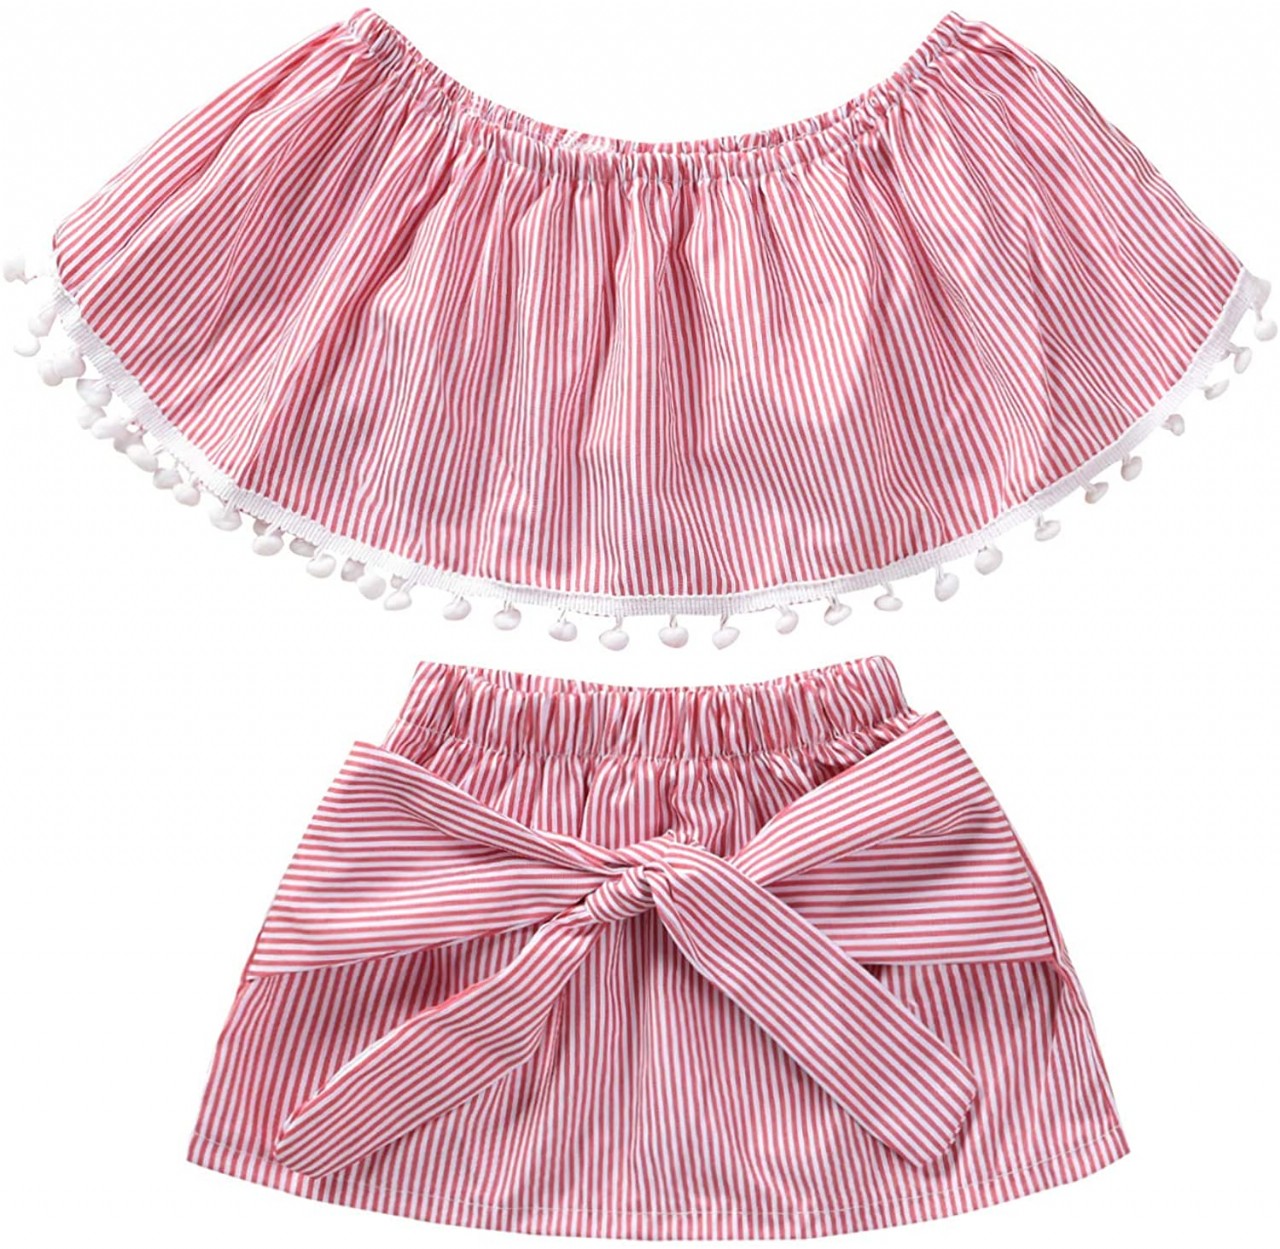 Dcohmch Toddler Girl Clothes, Baby Girls Cute Off Shoulder Top+Bowknot Skirt Little Girl Pink Stripe